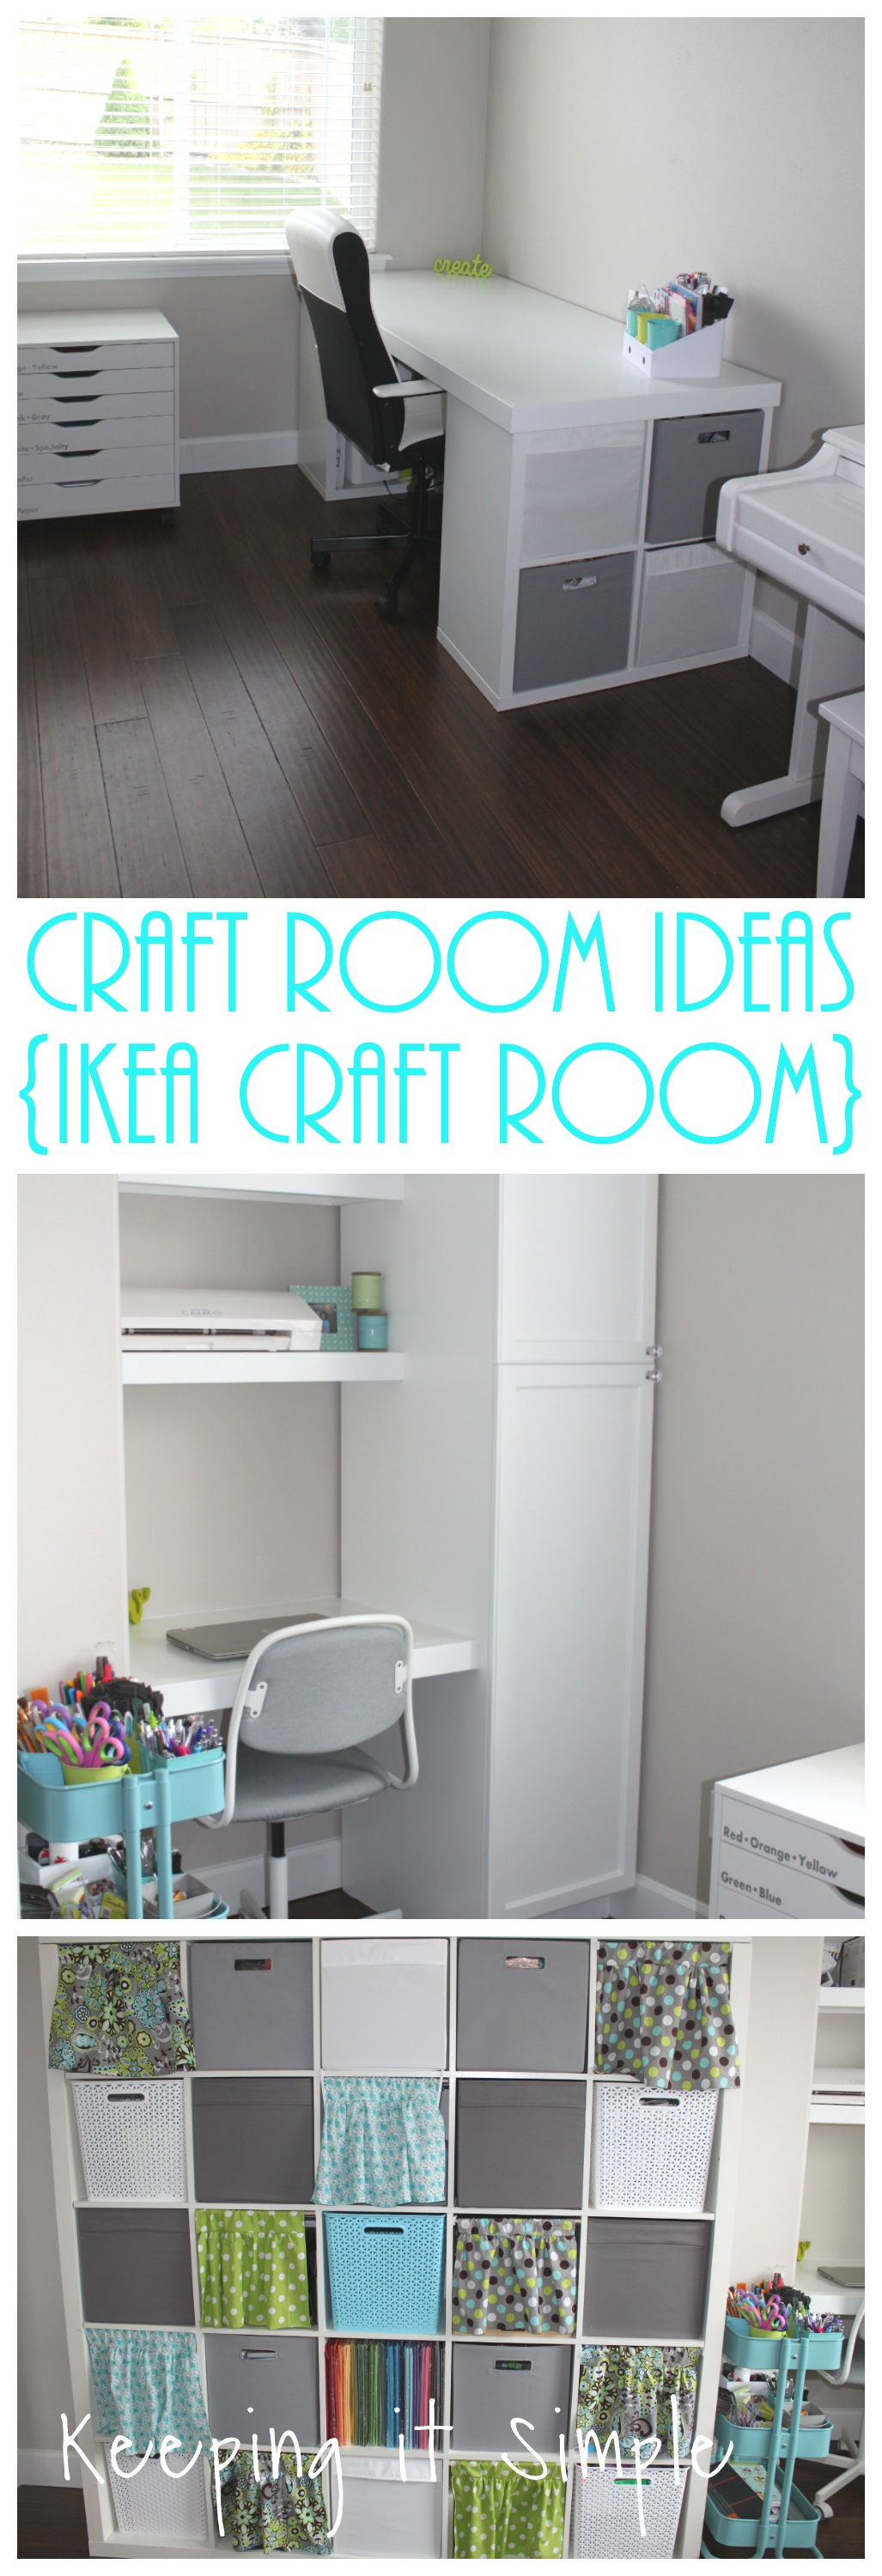 Craft Room Ideas Organization And Storage Ikea Craft Room